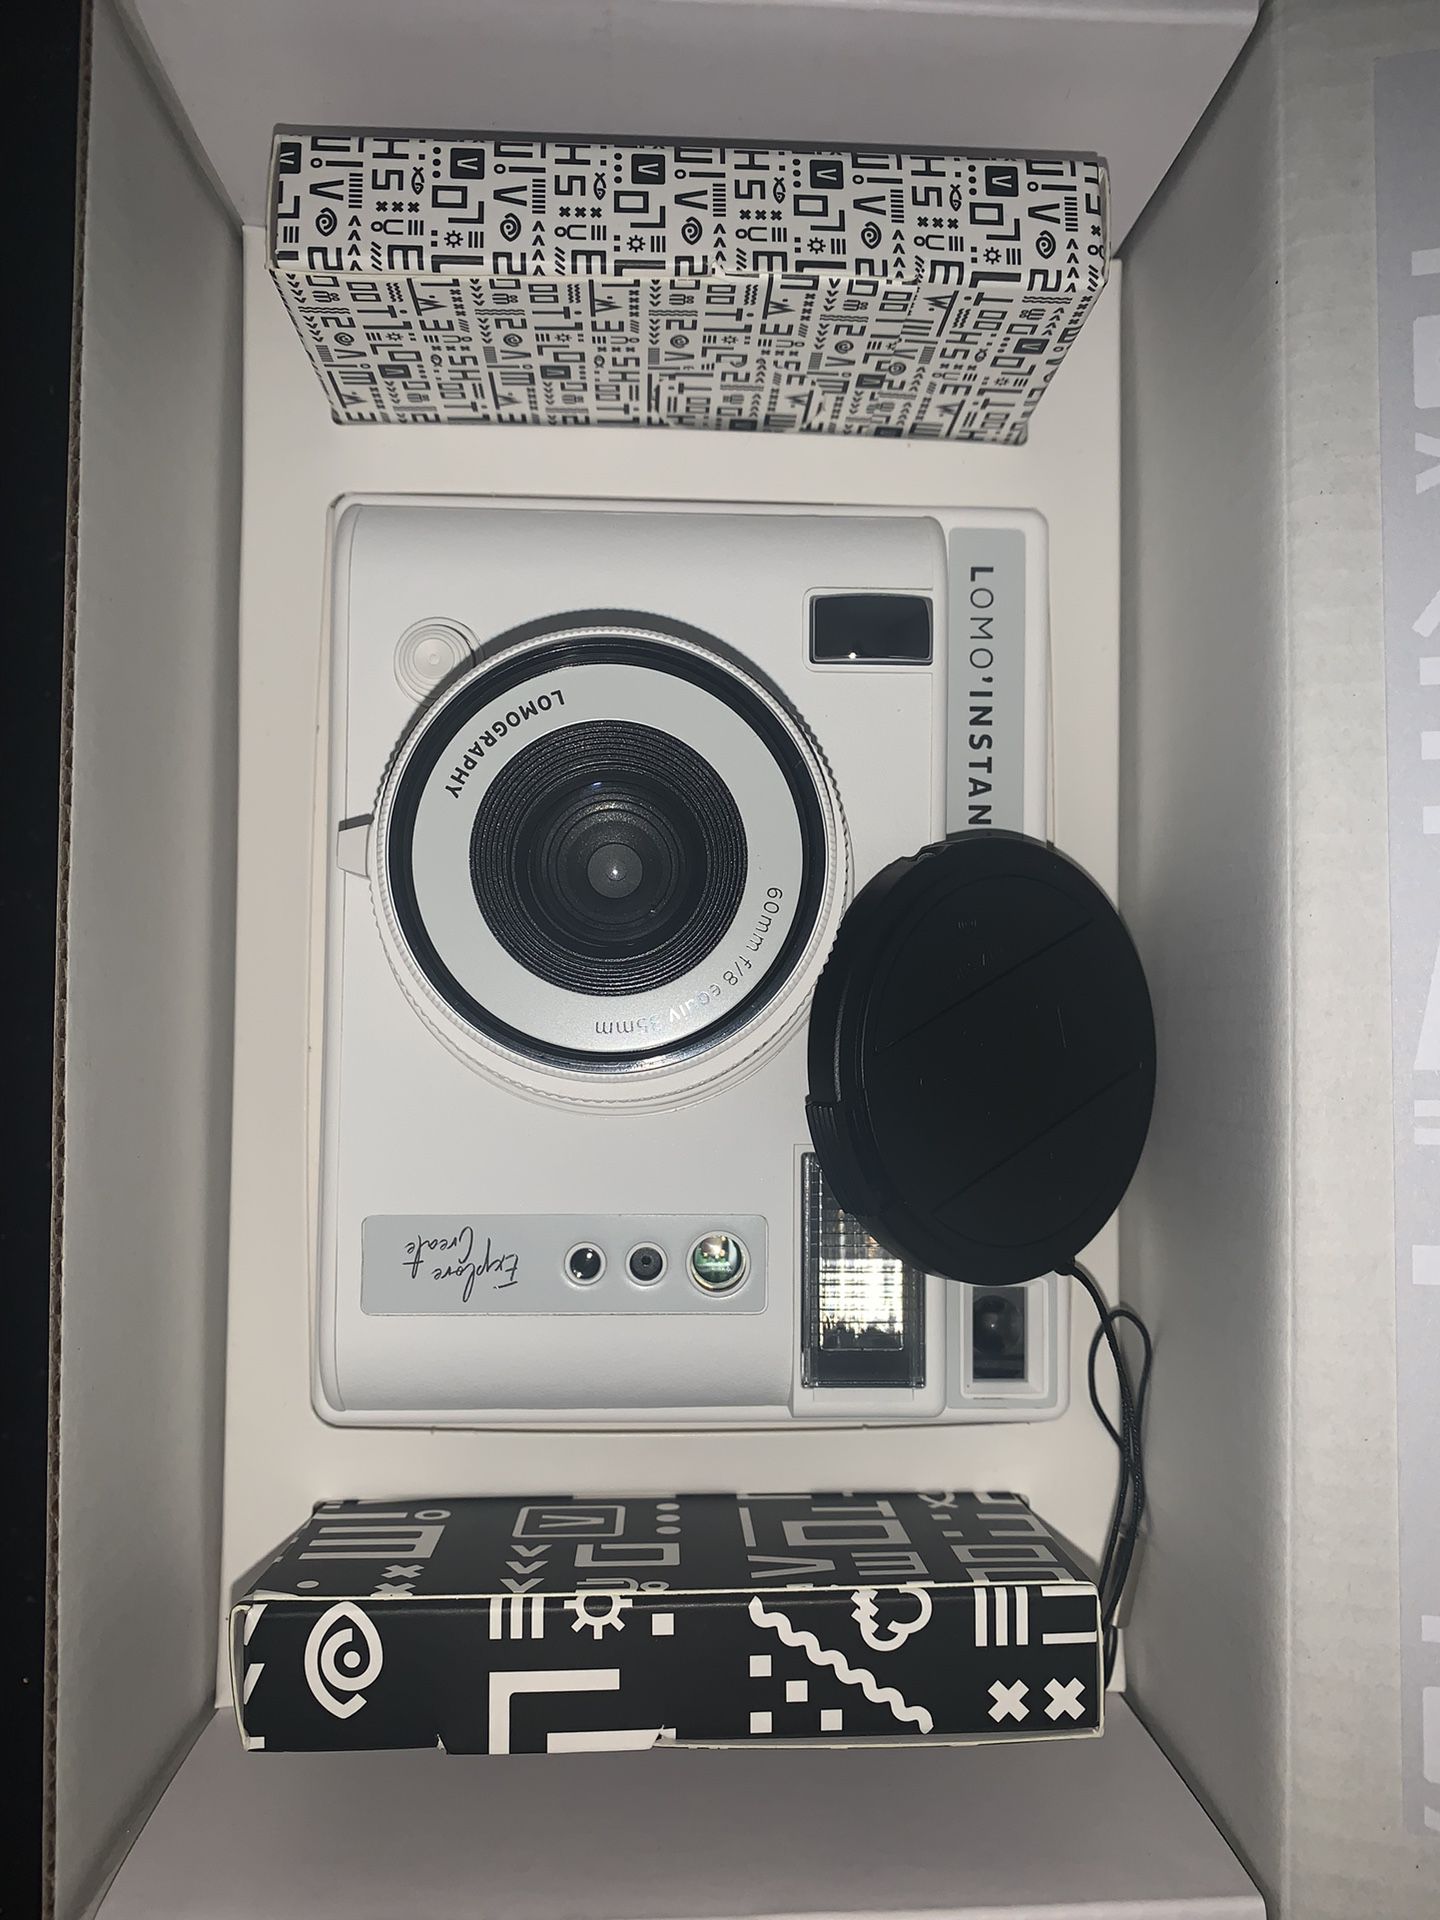 Lomography Lomo’Instant Automat The Adventure Challenge - Instant Film Camera